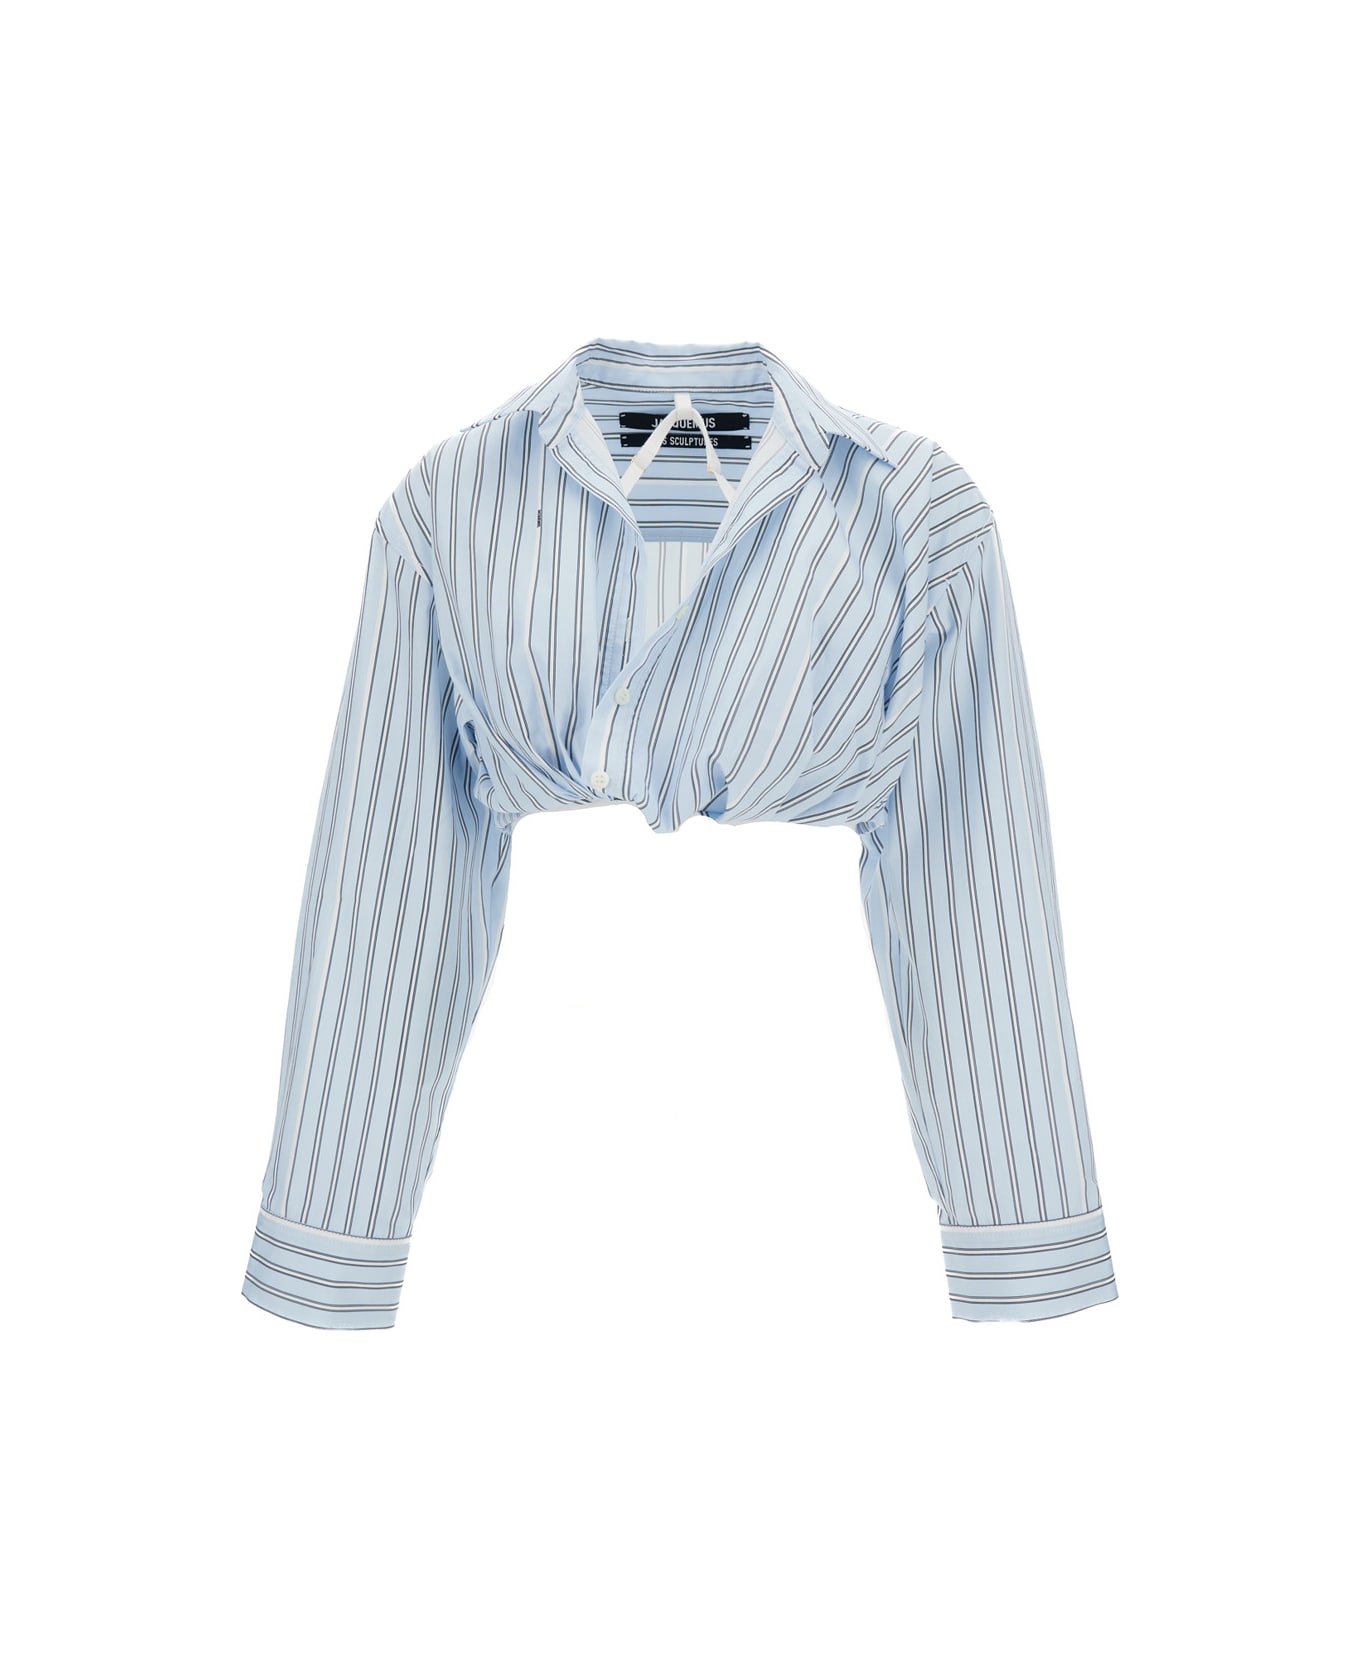 Jacquemus La Chemise Bahia Shirt - Print blue stripe